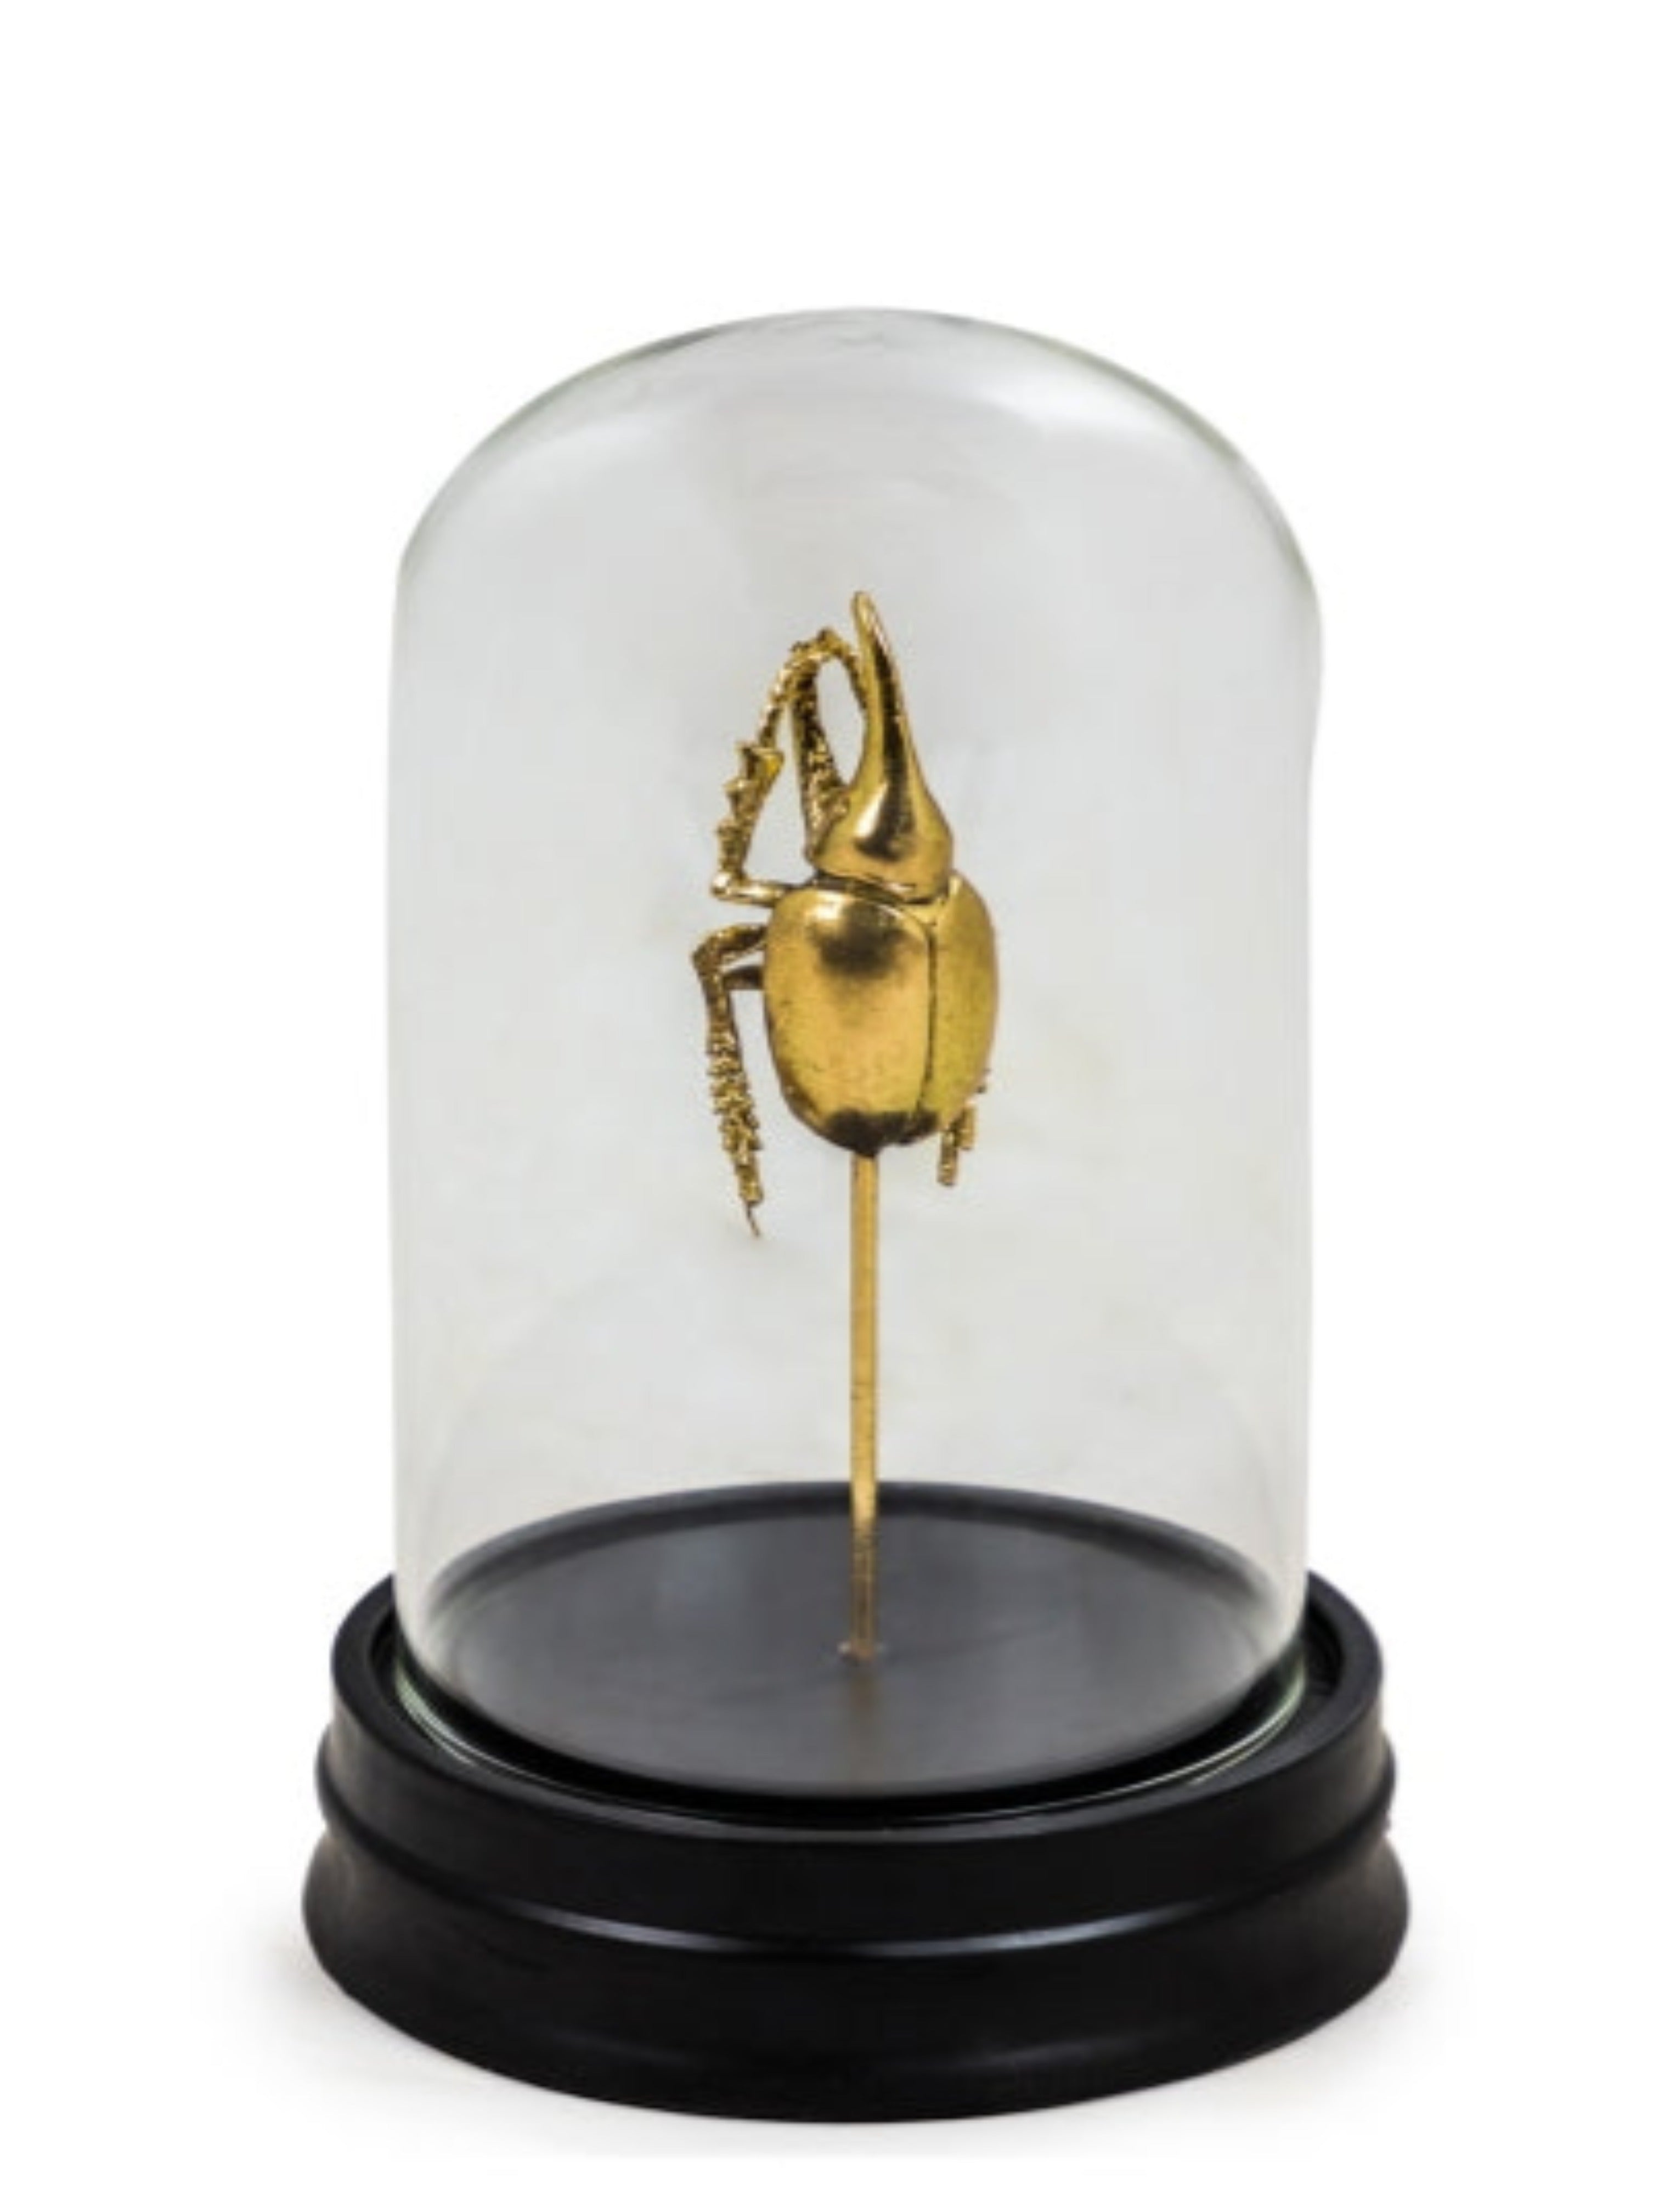 Golden Hercles Beetle Ornament